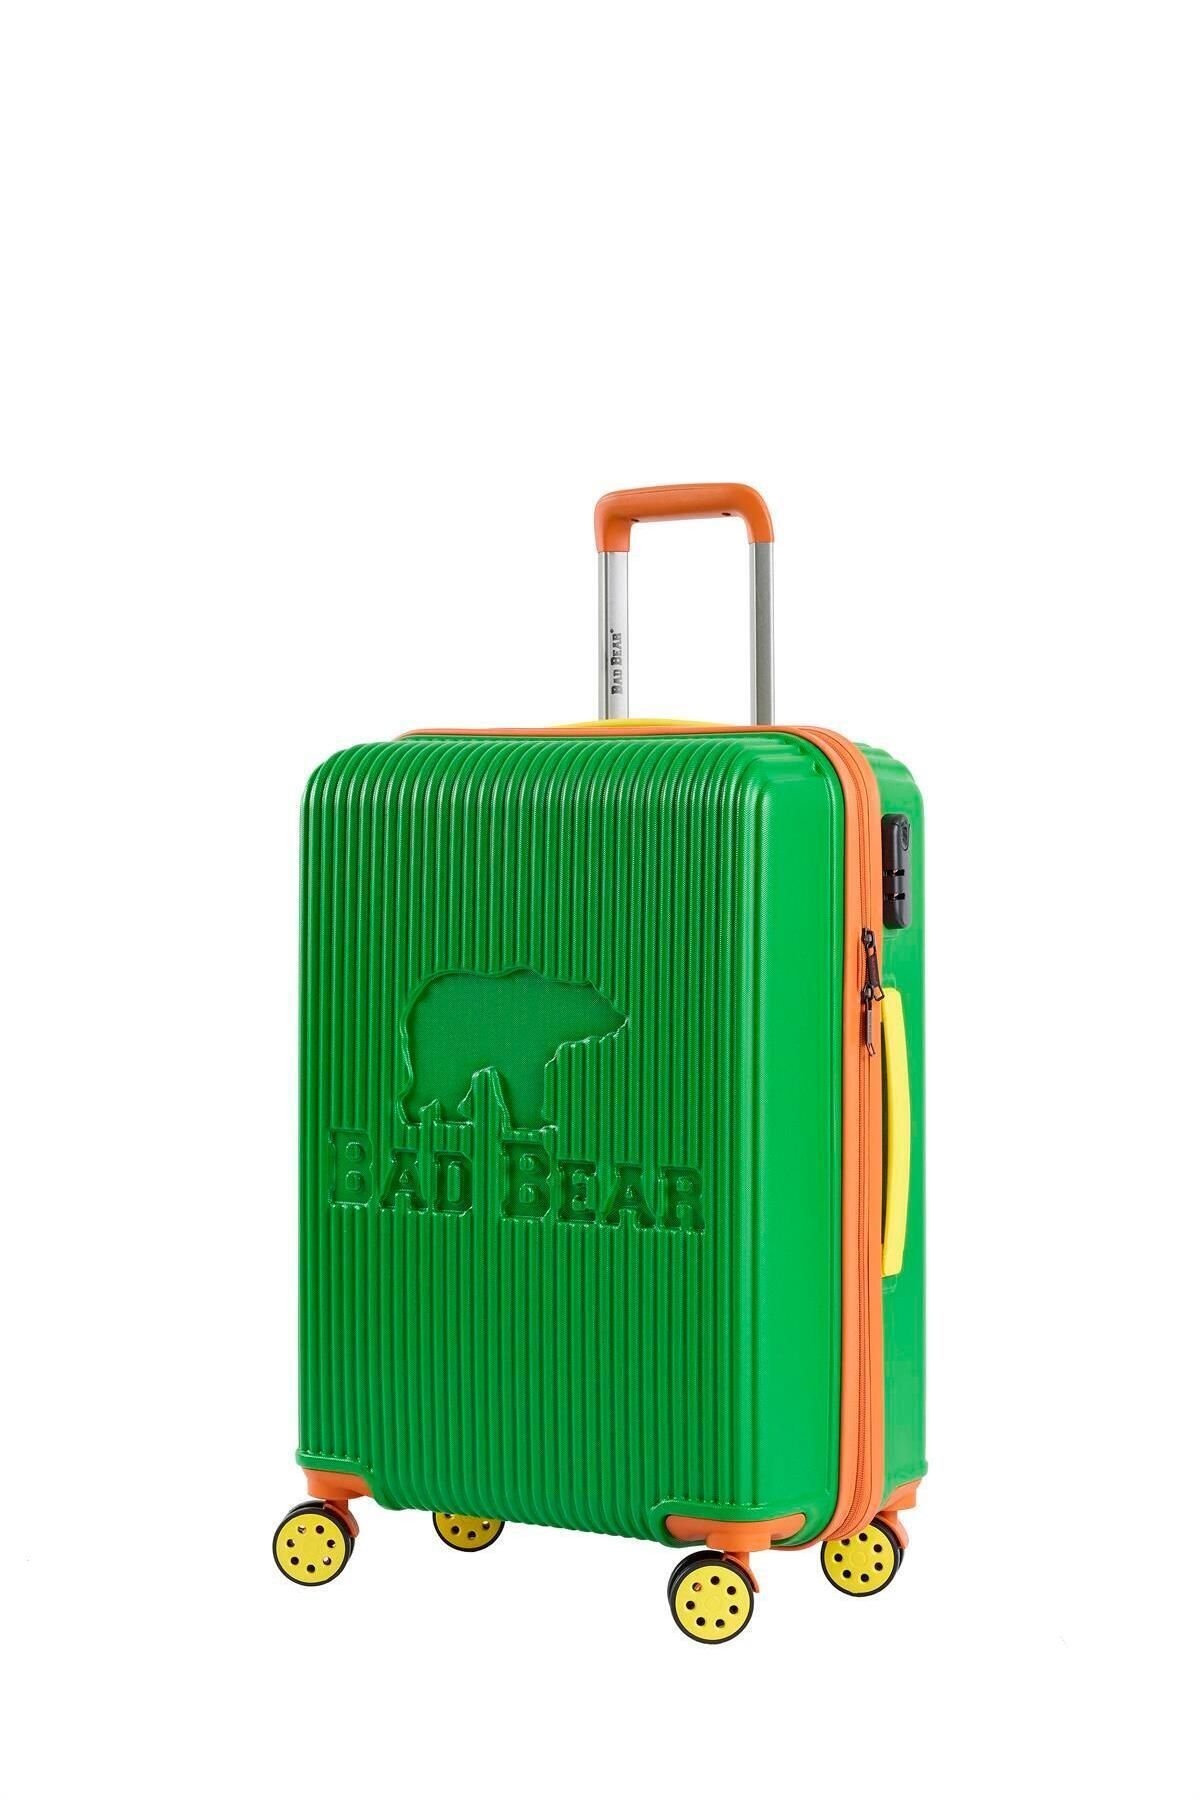 Bad Bear Logo Yeşil Orta Boy Tekerlekli Abs Valiz 64 Lt.